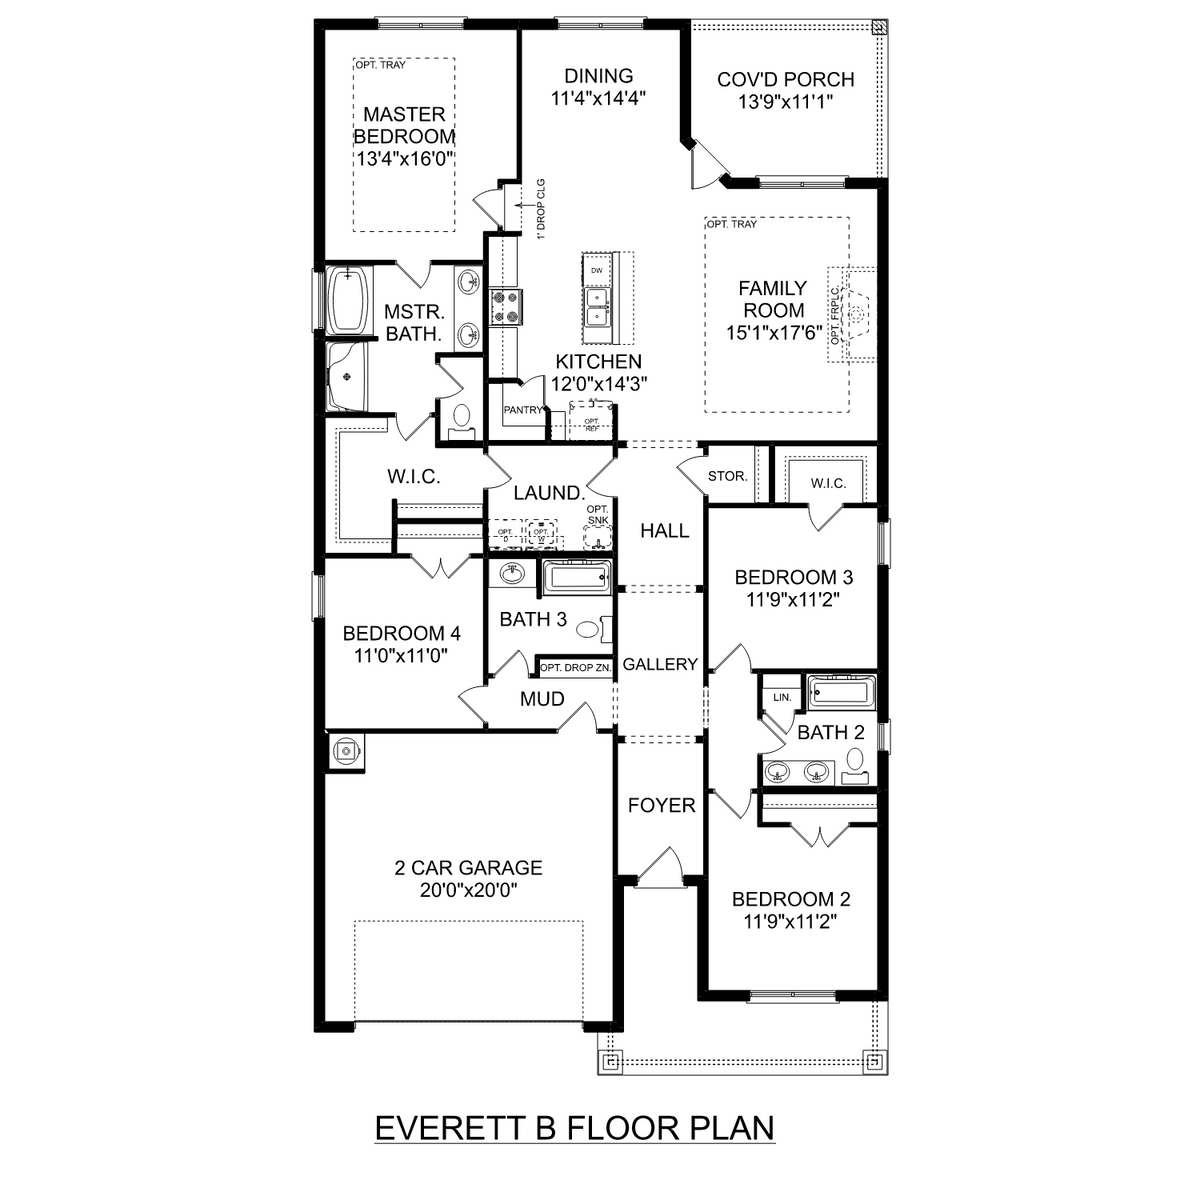 1 - The Everett B floor plan layout for 2150 Dawson Lane in Davidson Homes' The Reserve at North Ridge community.